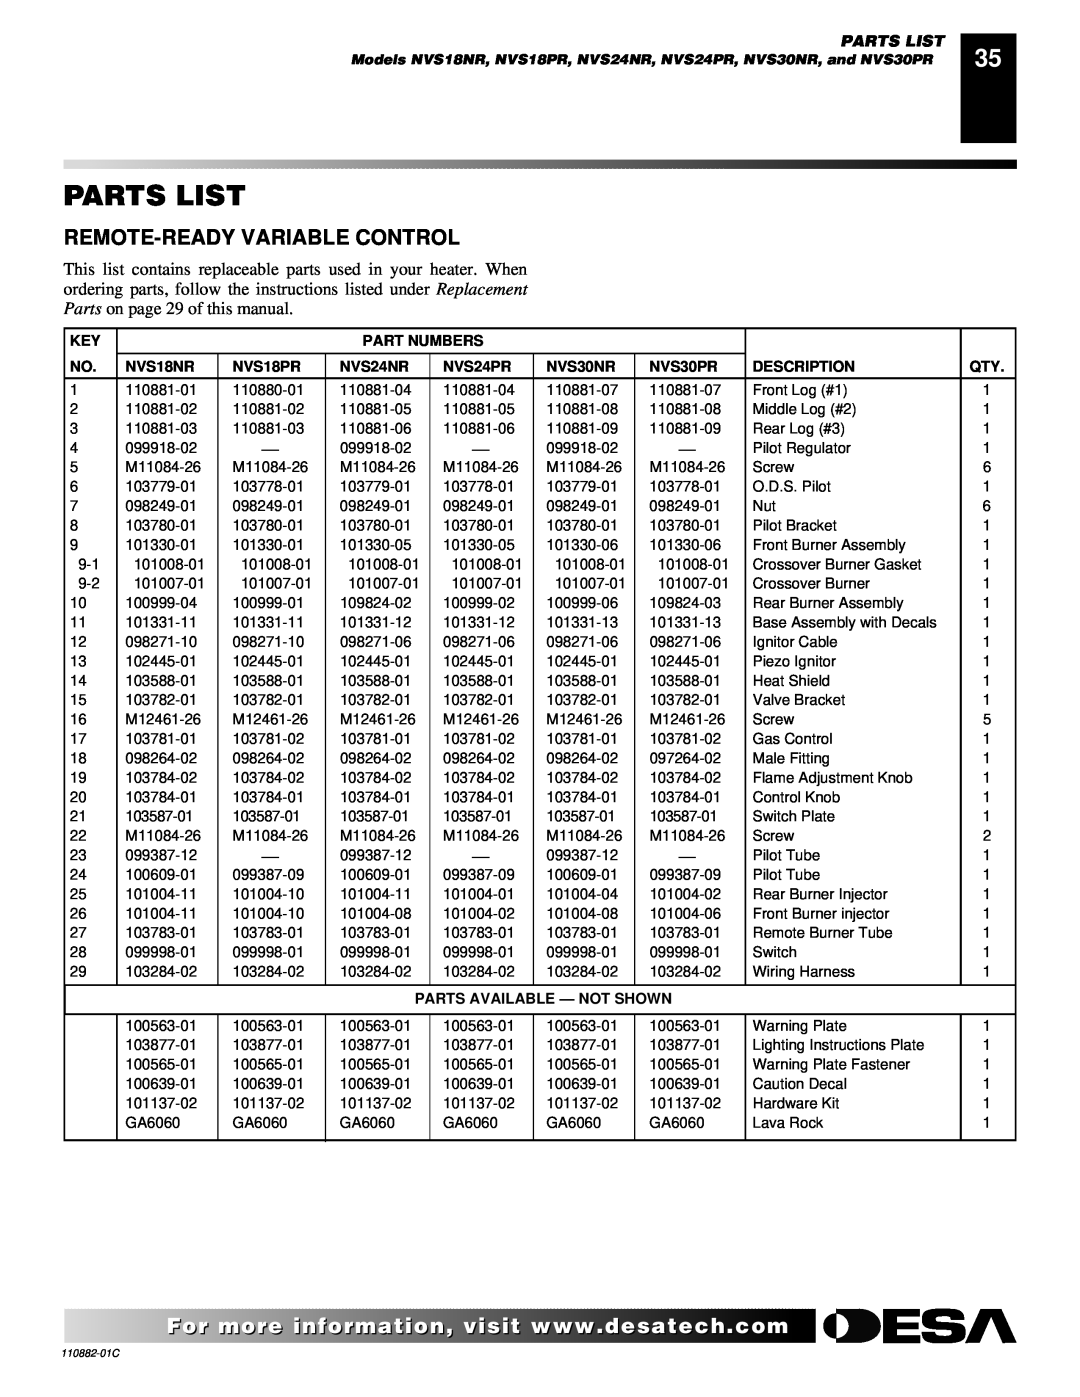 Desa R, V, T, 30 installation manual Parts List, Remote-Readyvariable Control 